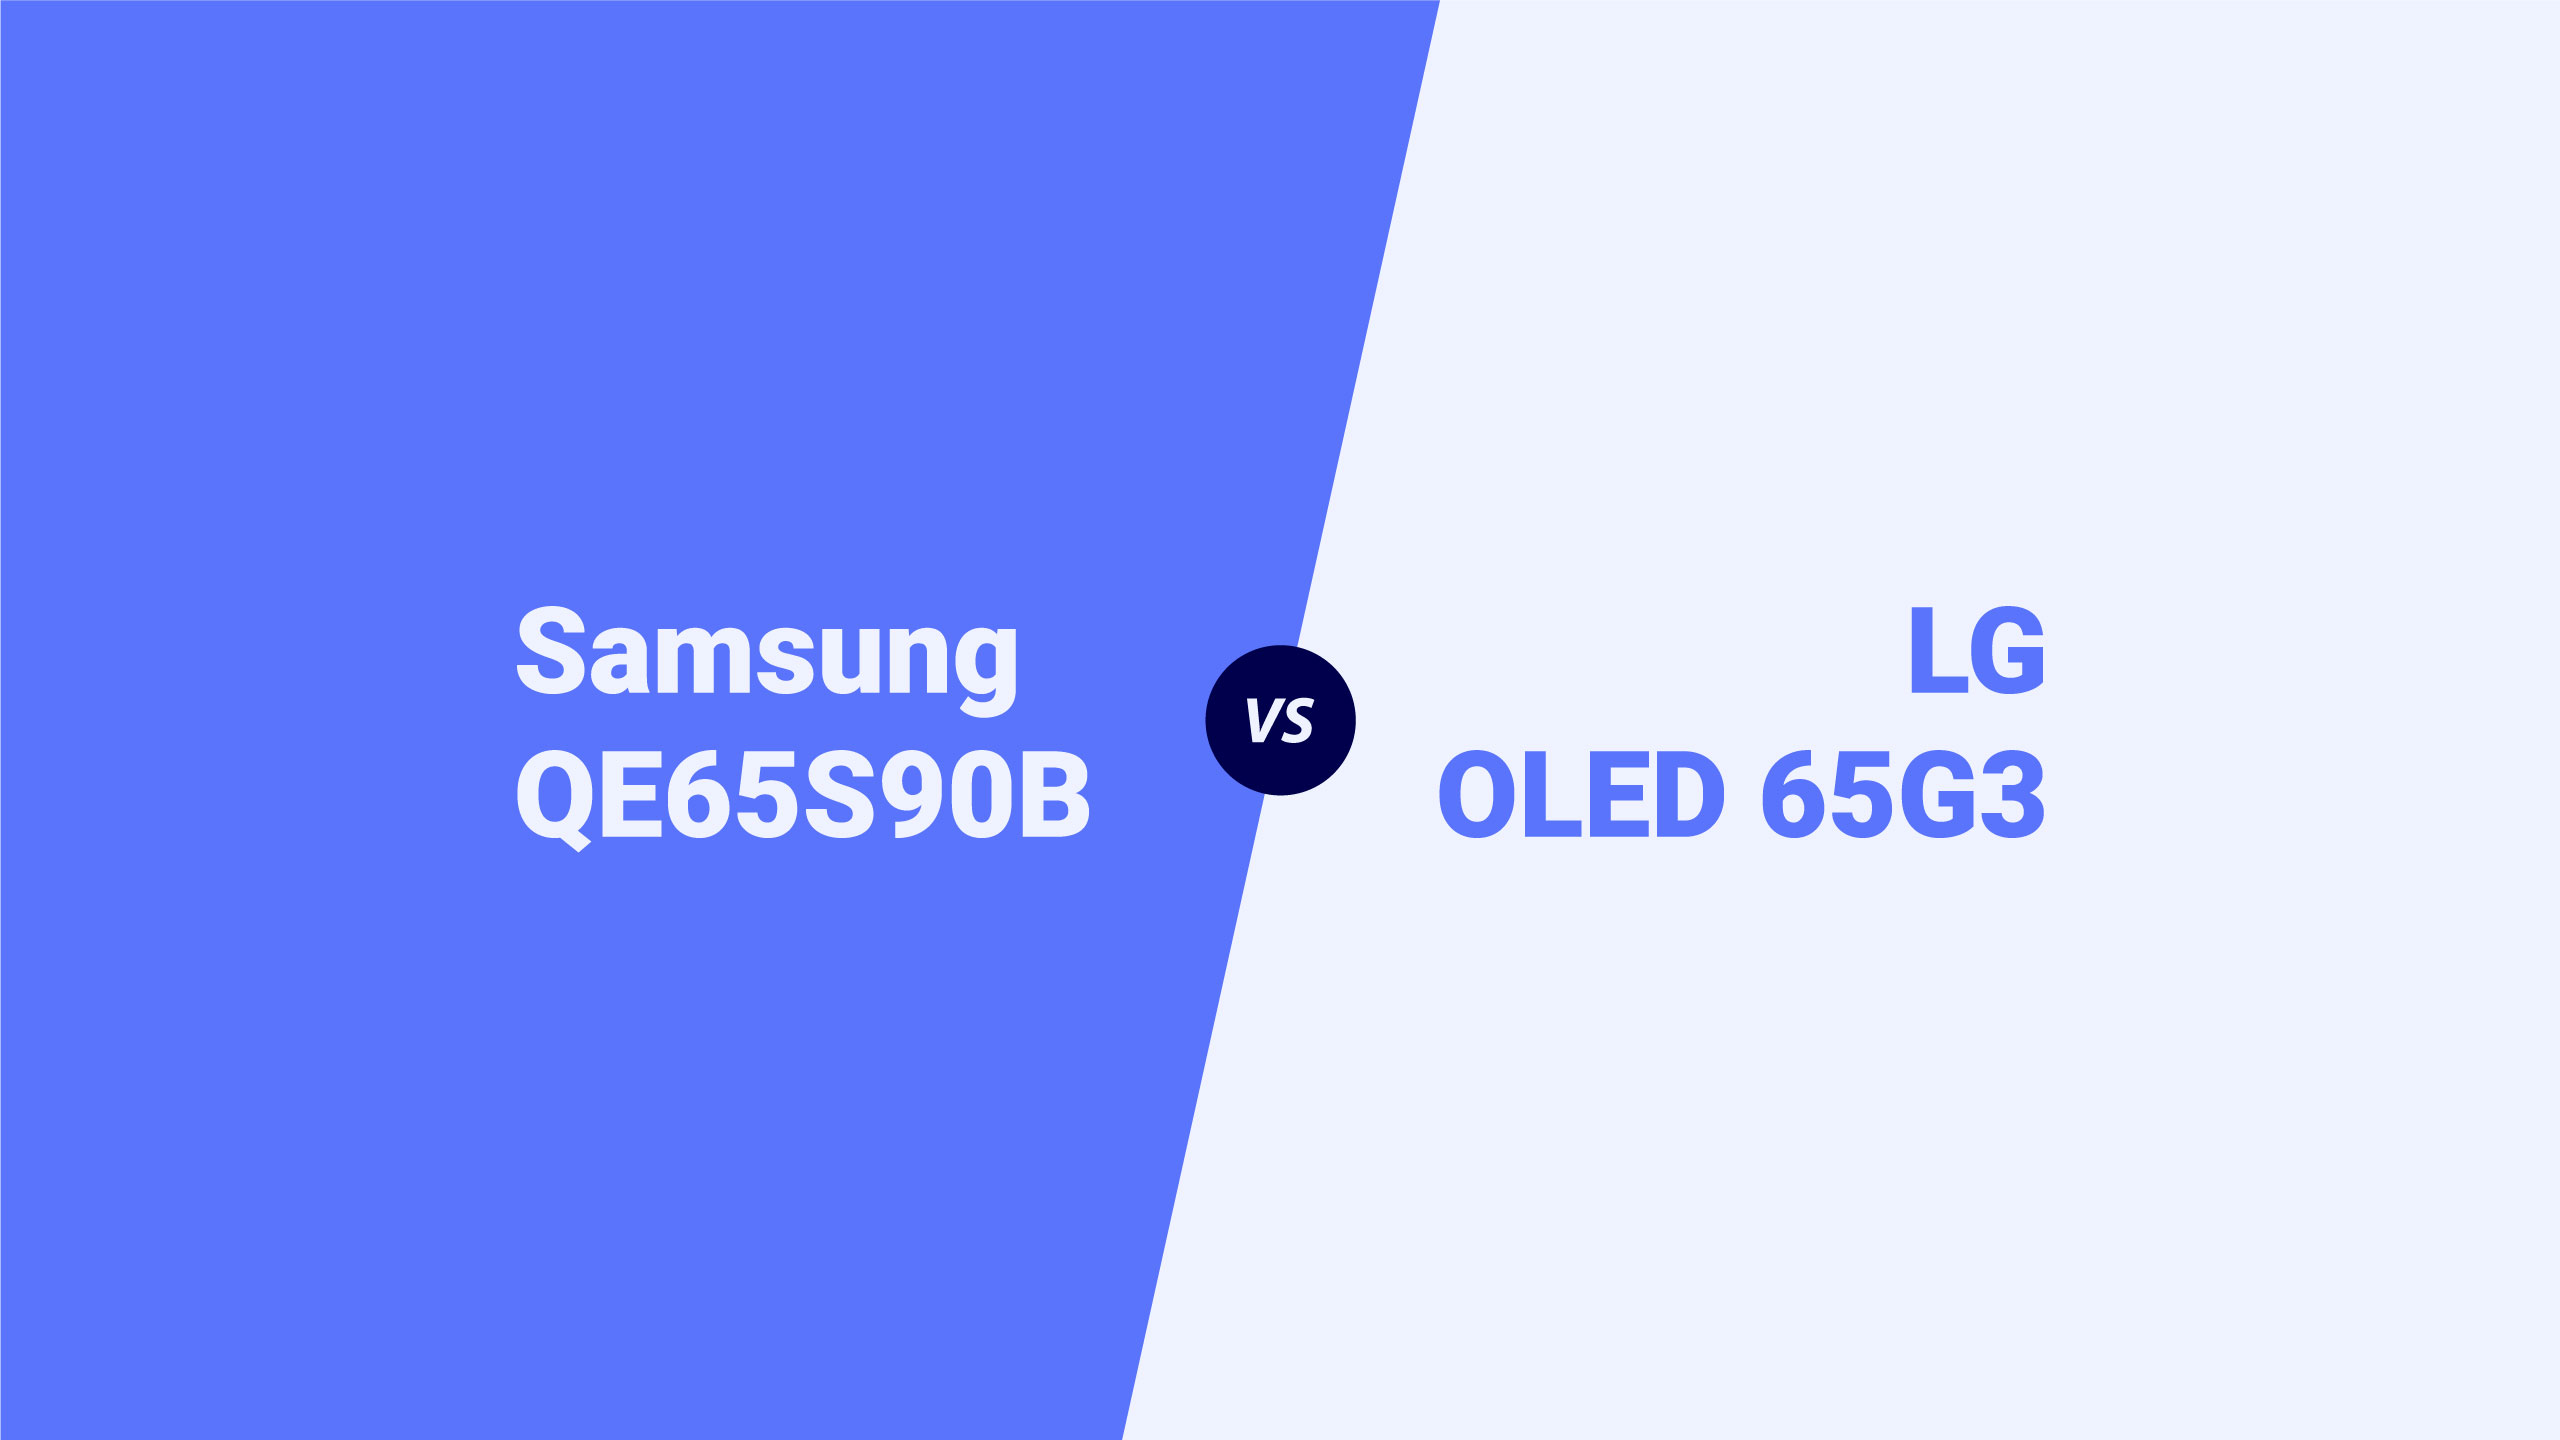 Samsung QE65S90B vs LG OLED 65G3